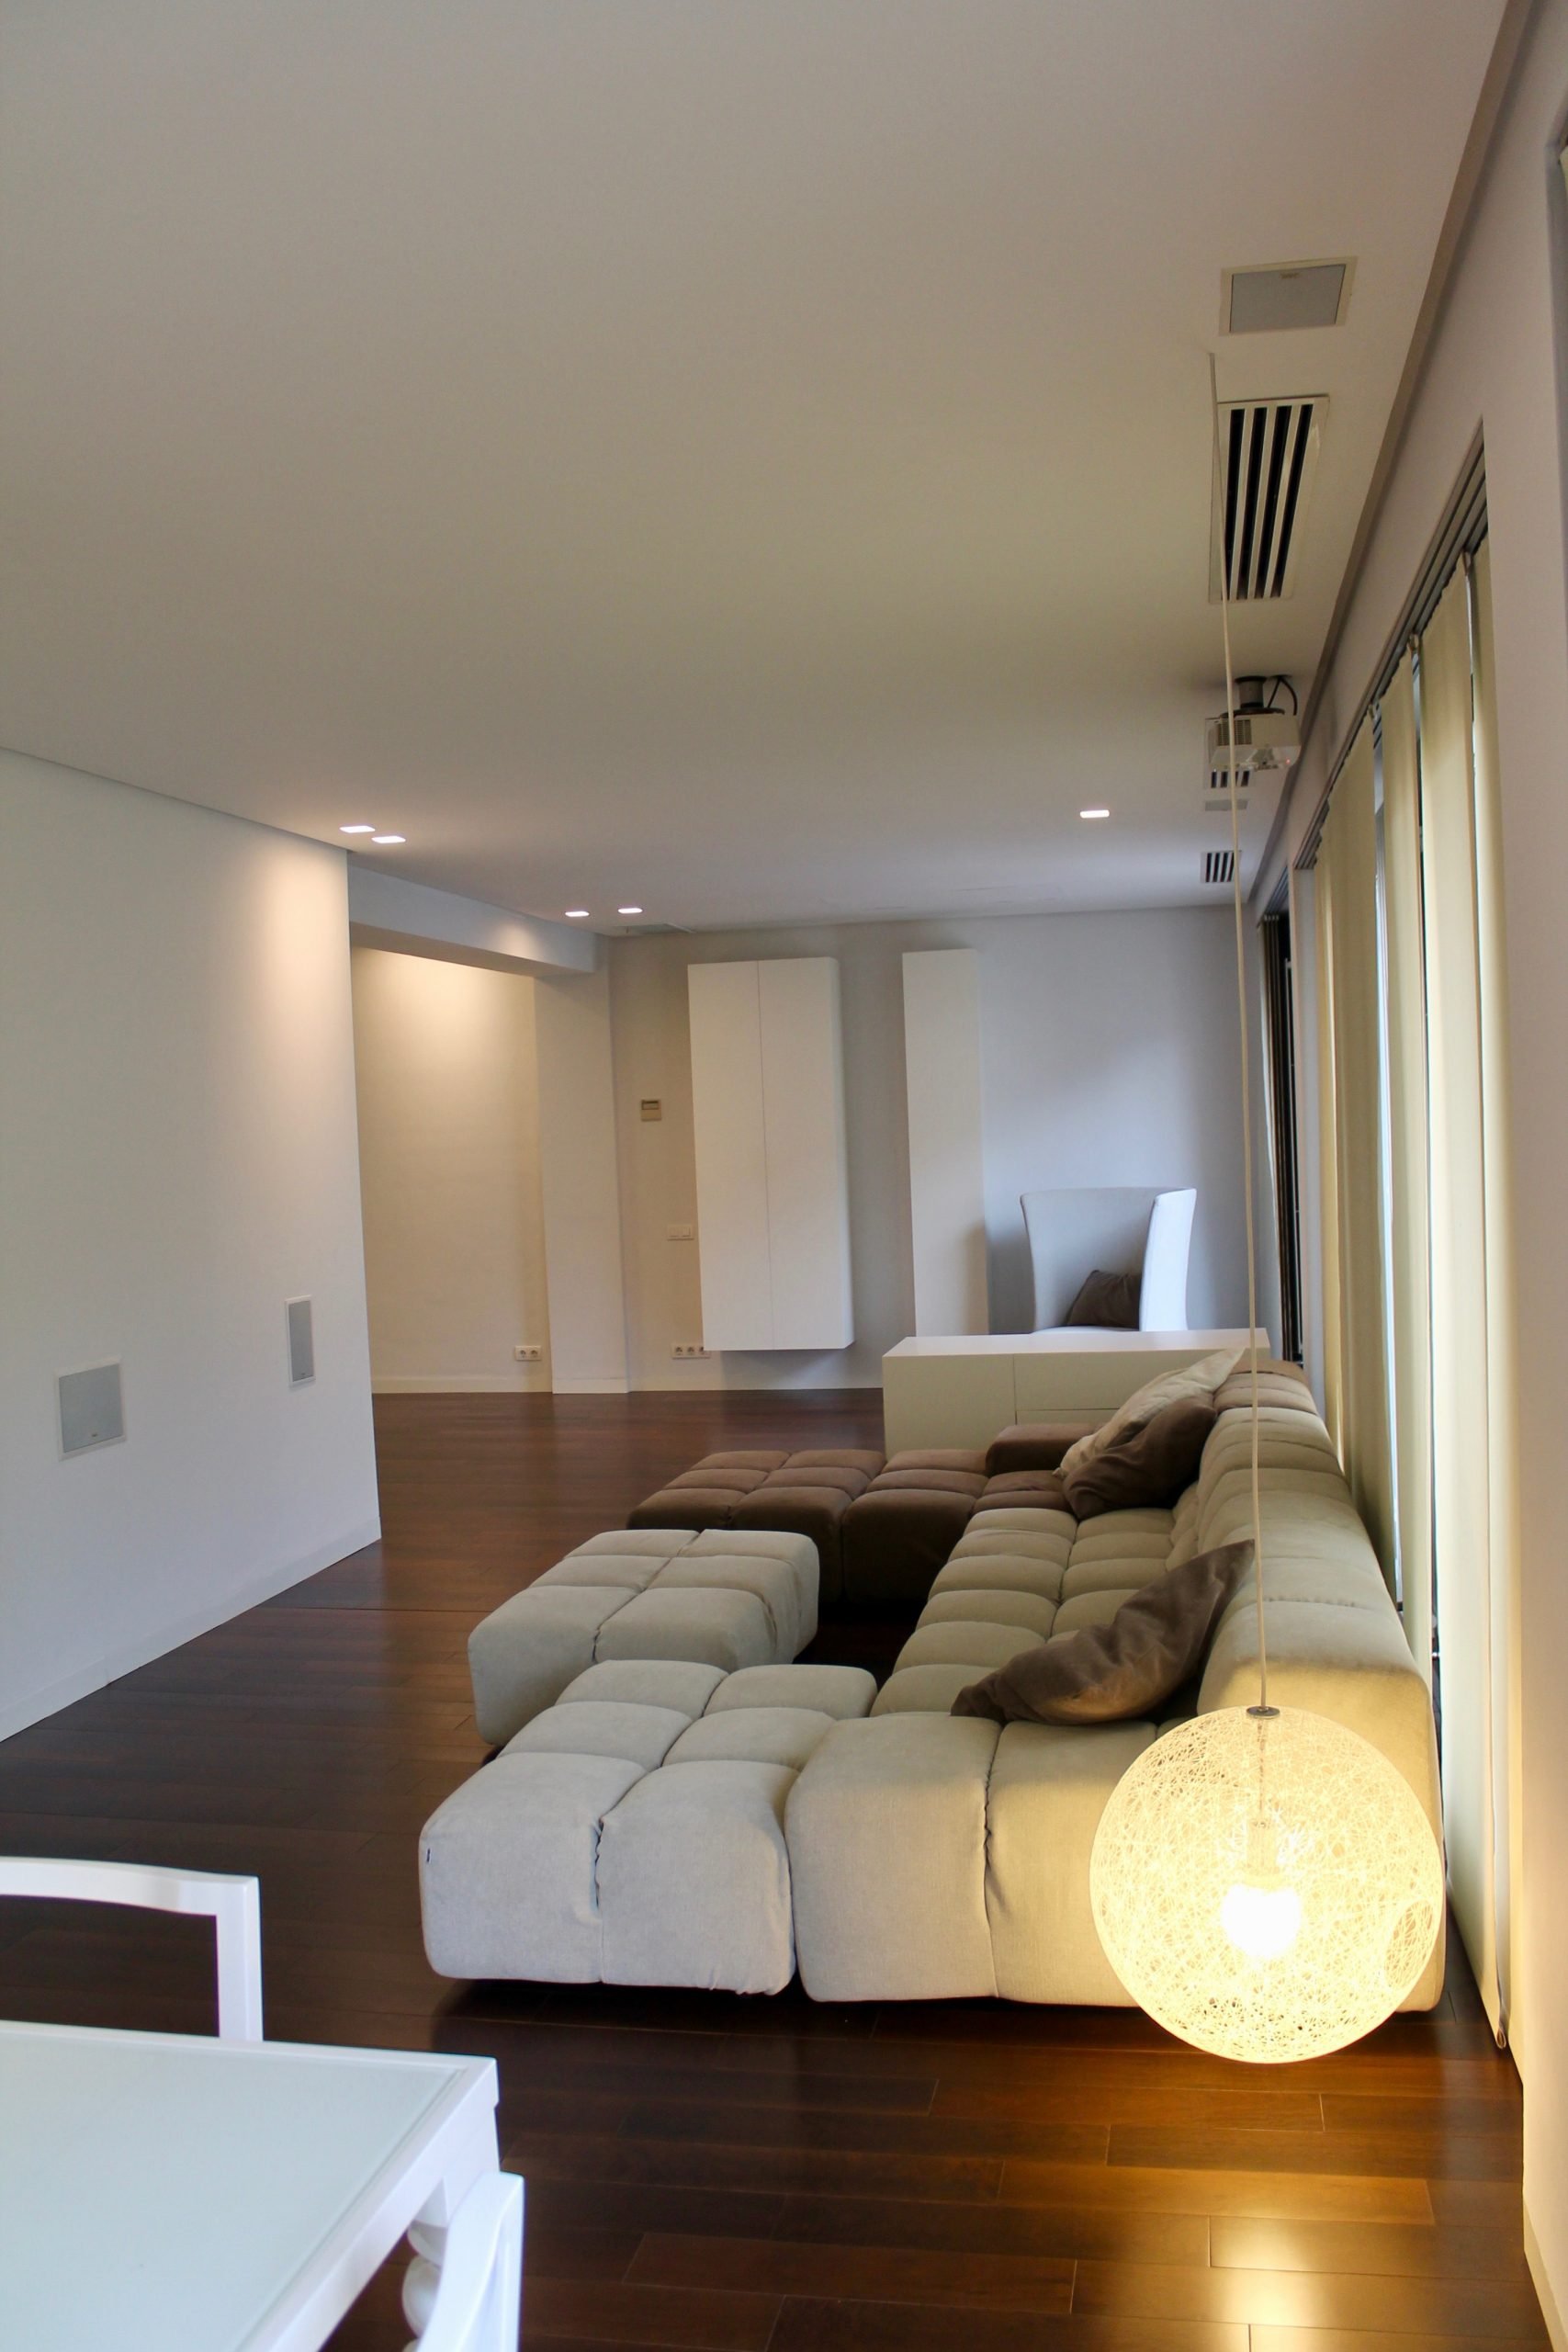 Germana - Exclusive luxury apartment in Valencia